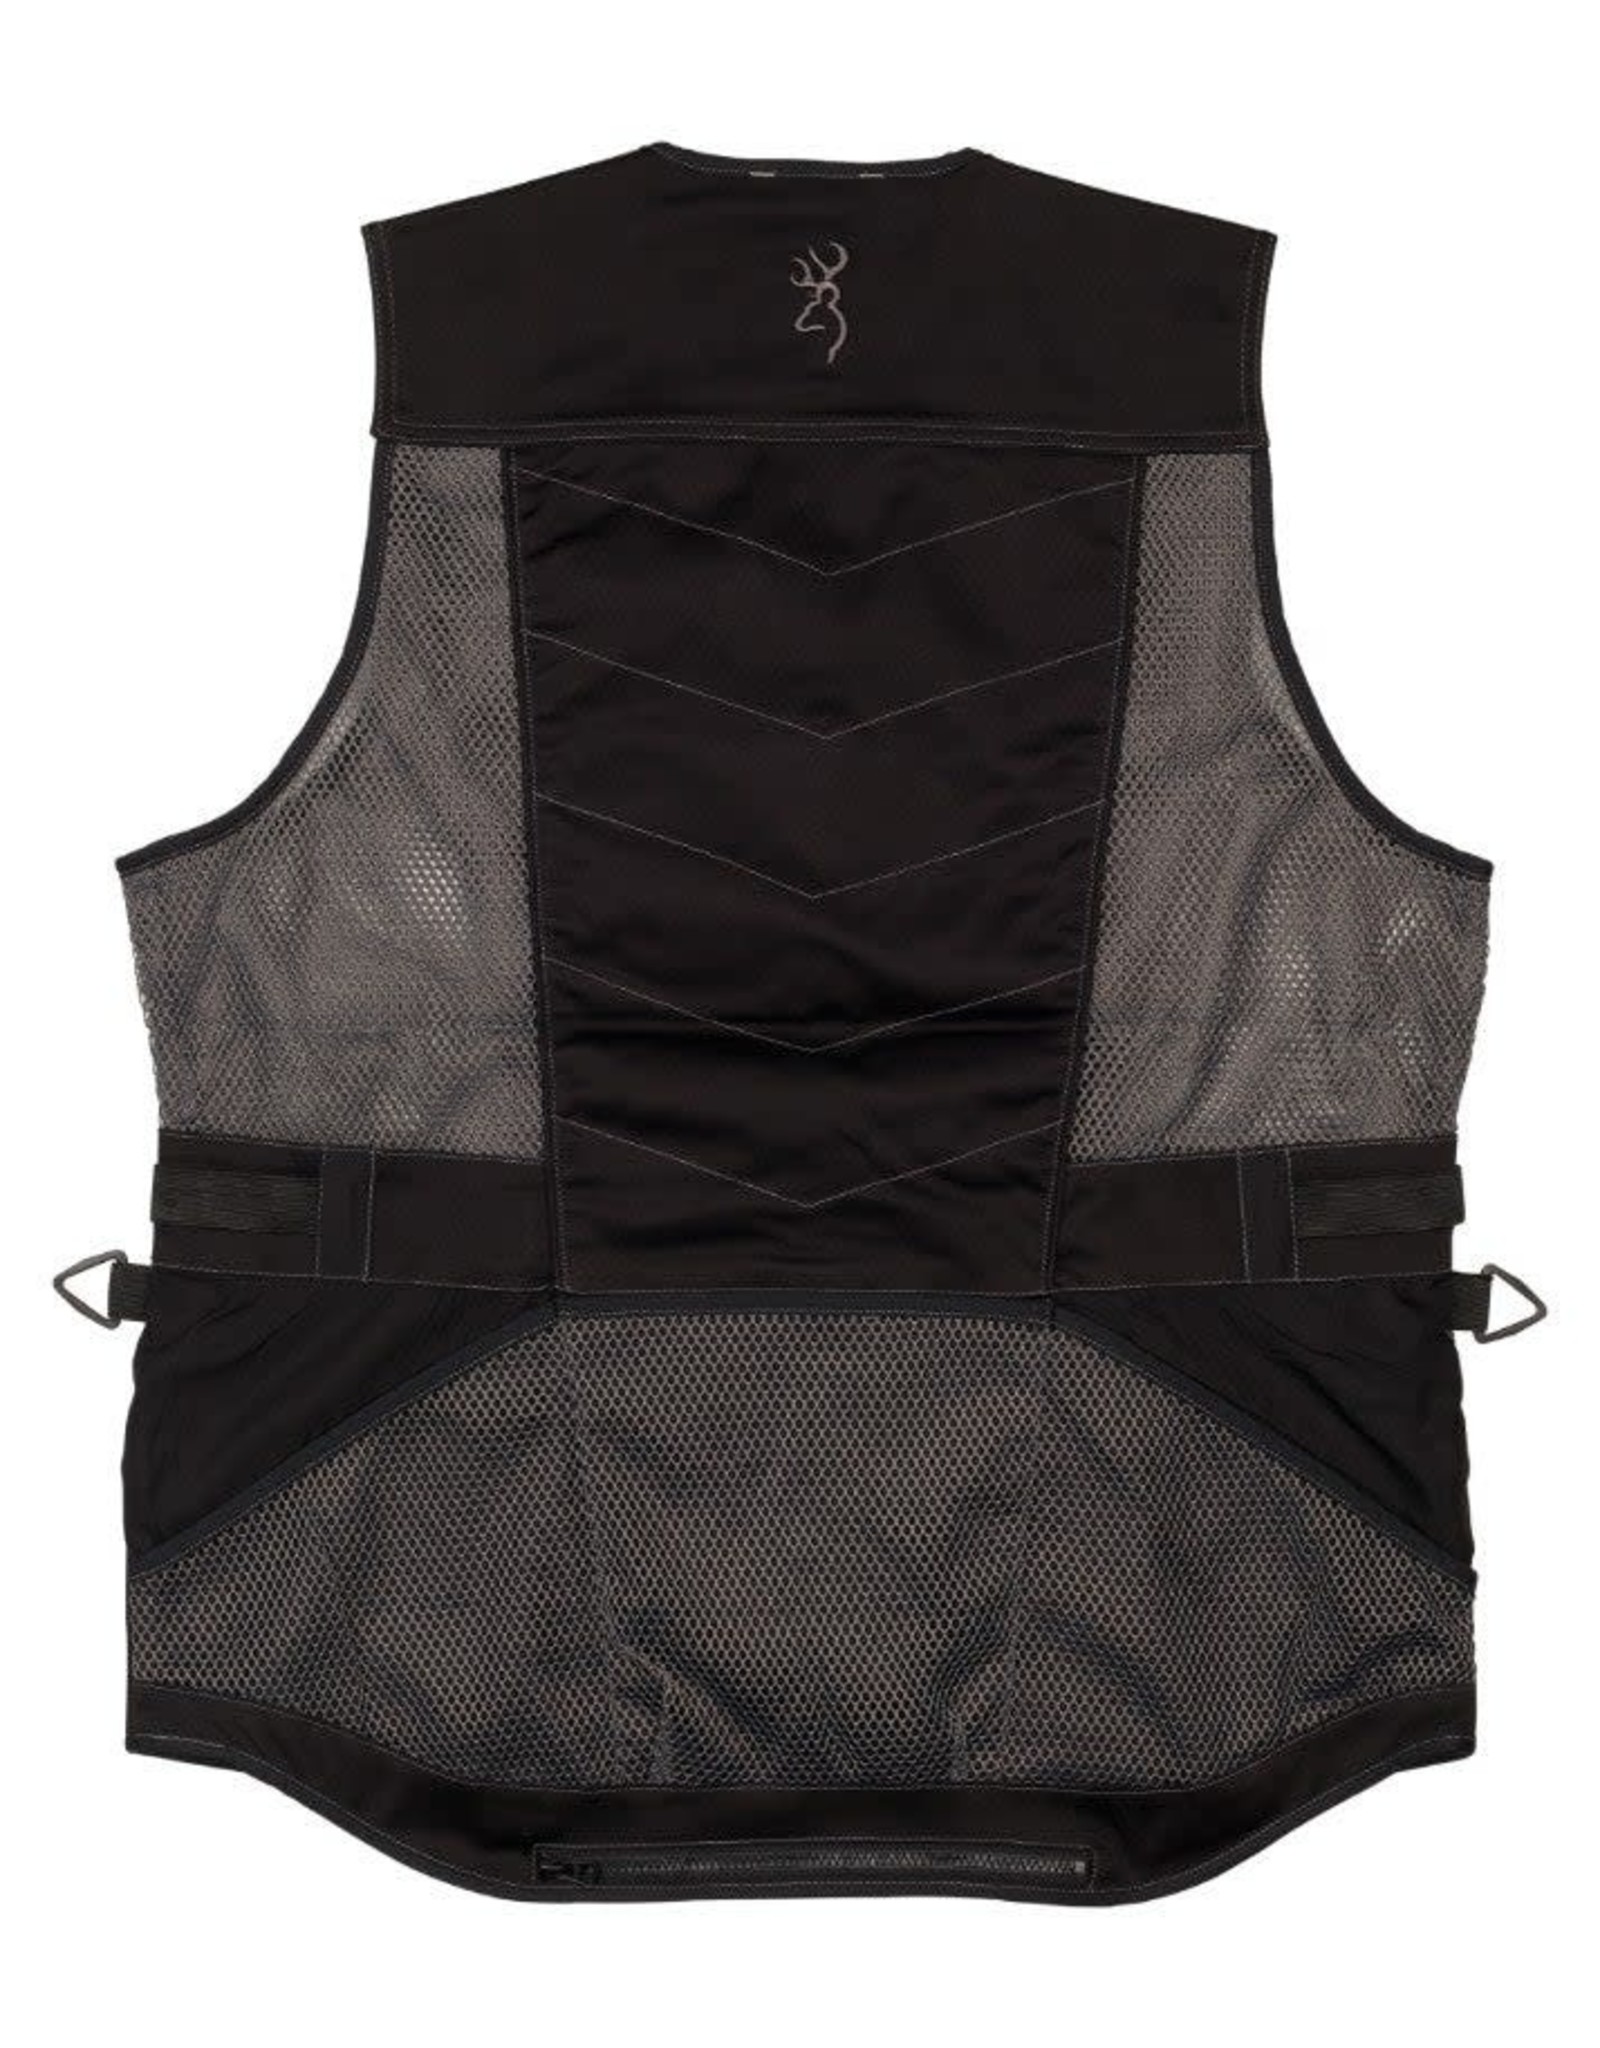 Browning Ace Shooting Vest Blk/Blk - XL - LEFT HAND